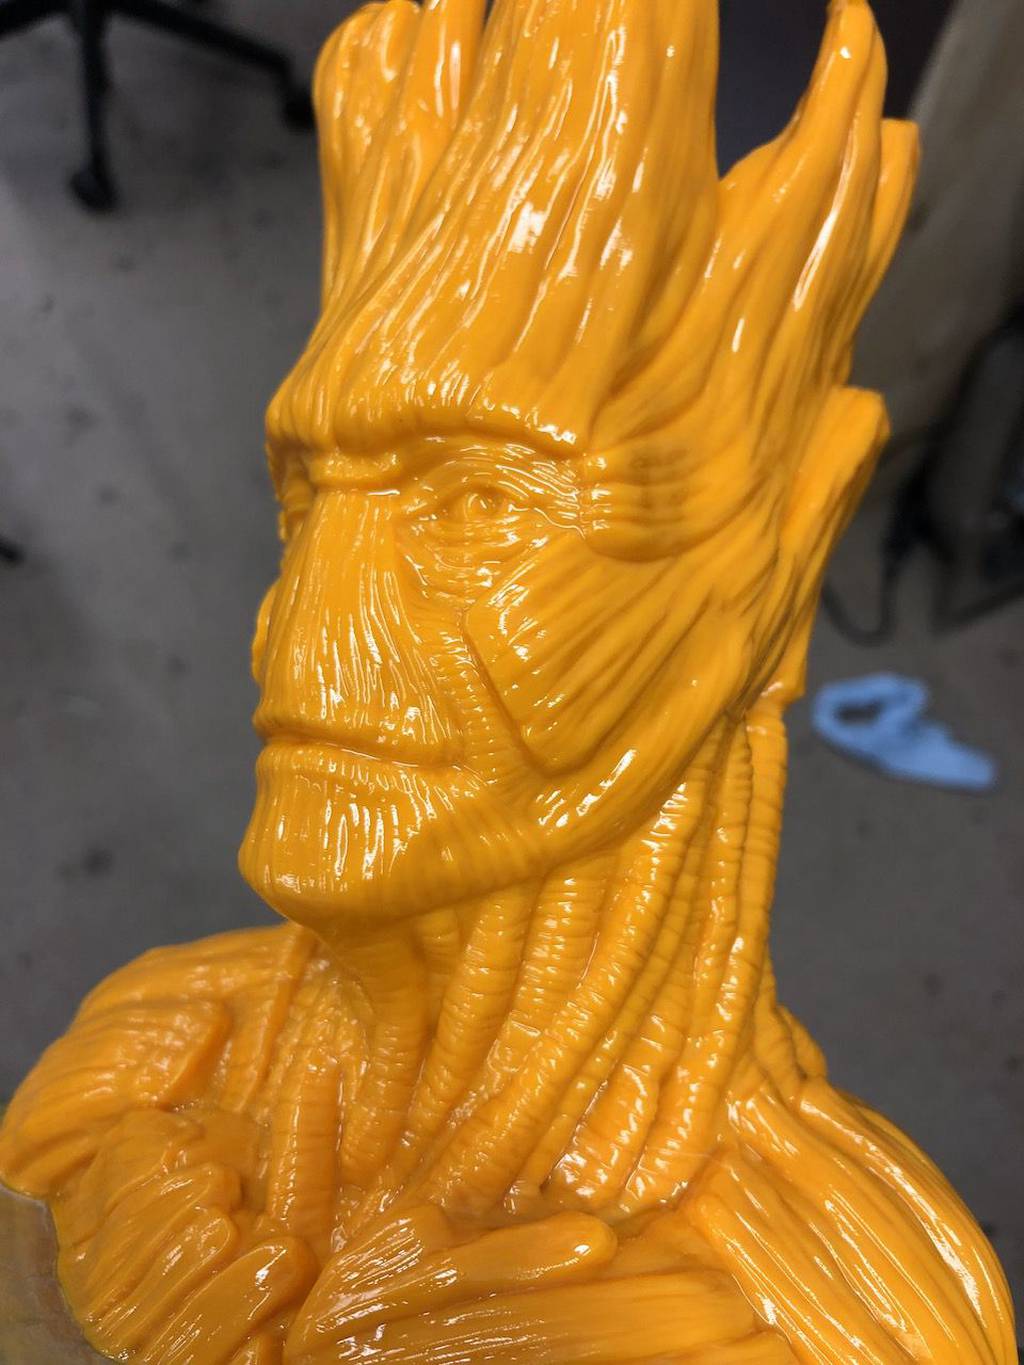 3D Printing
